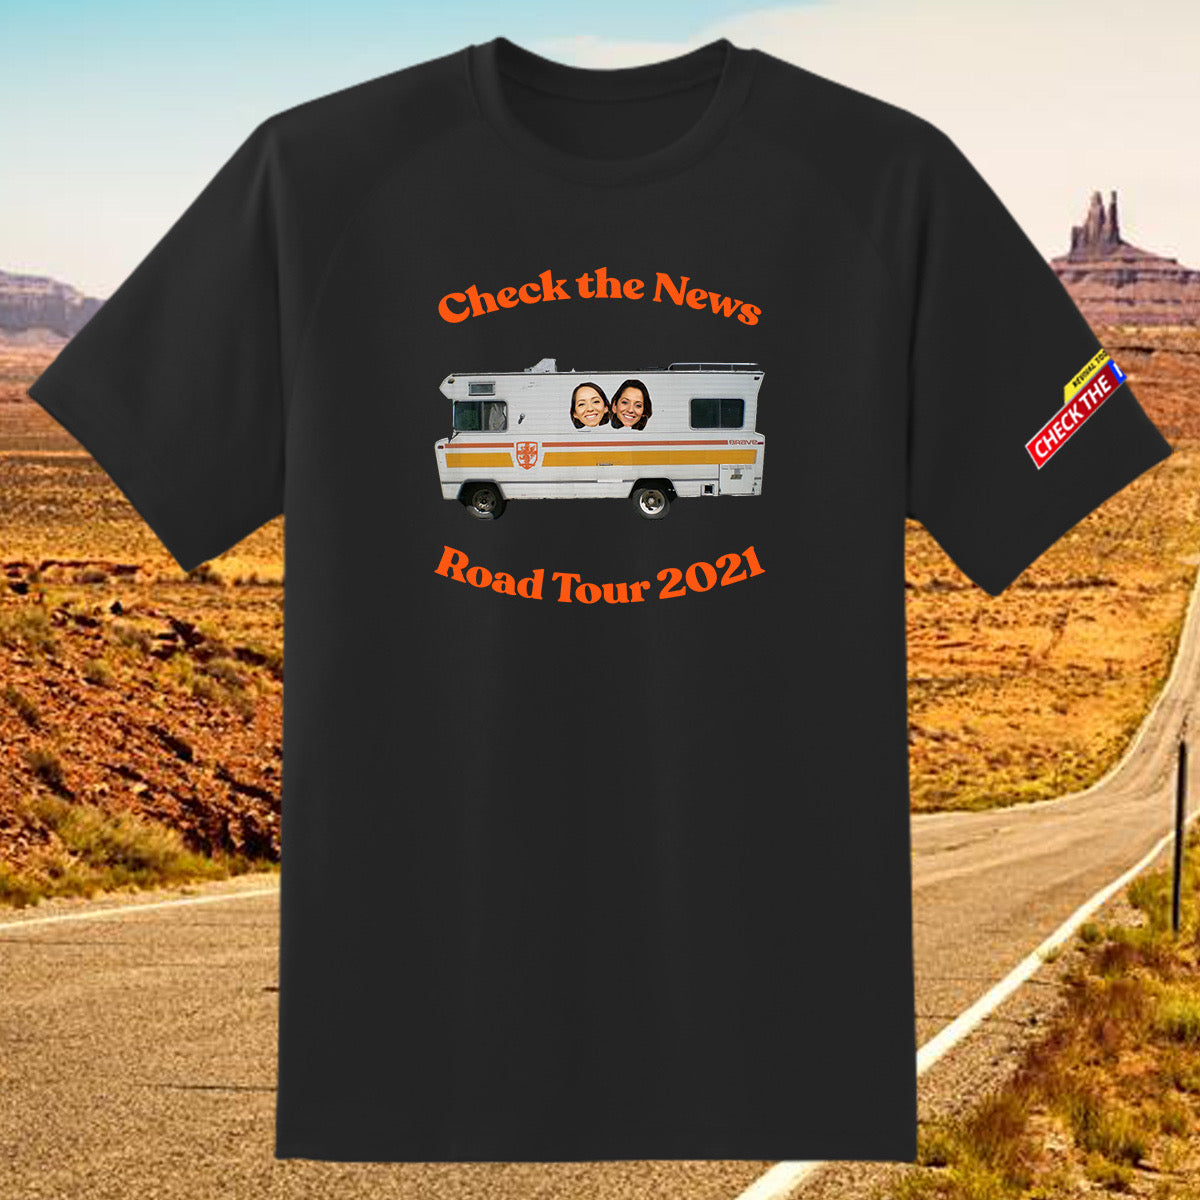 "RV Road Tour" T-Shirt